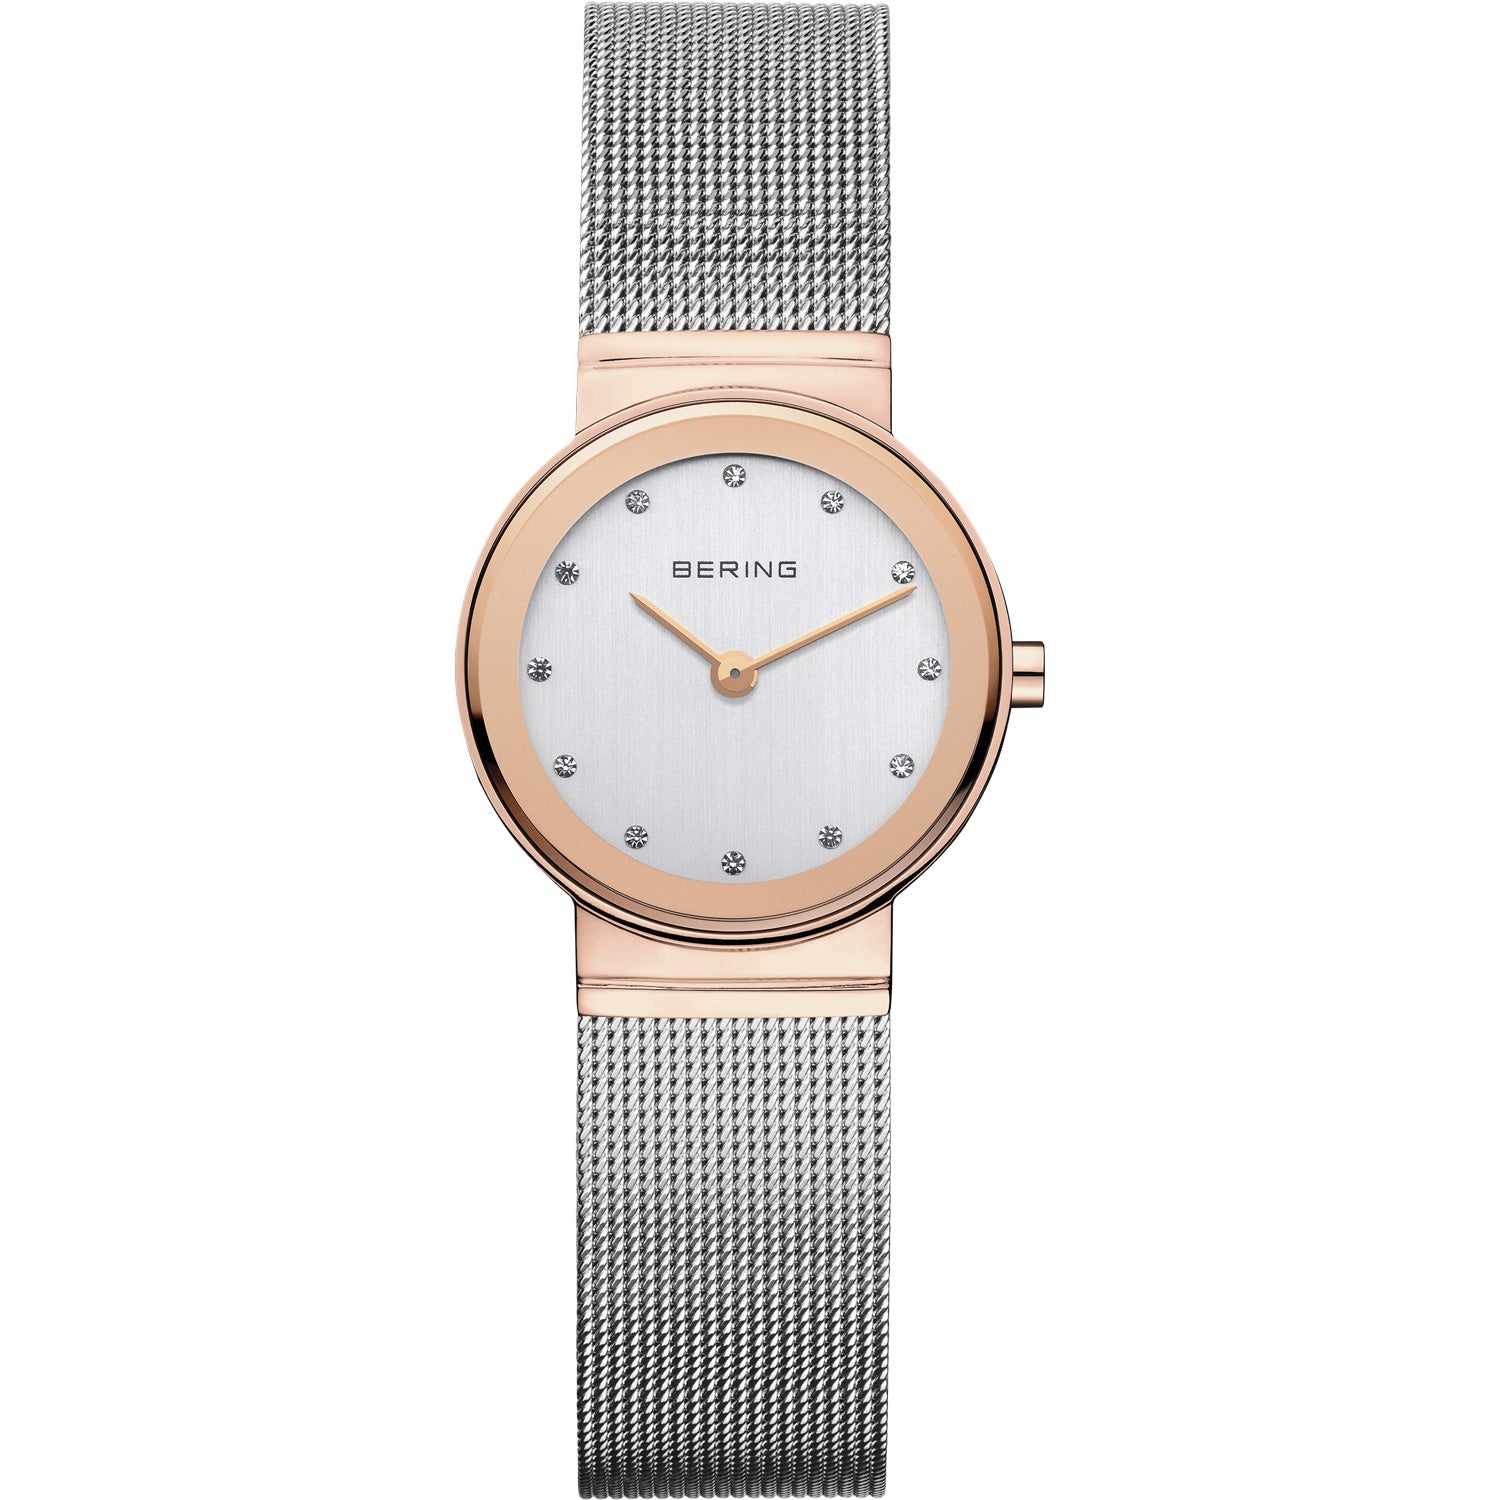 Bering-Armbanduhr silber-rosé APAUB4222 - Schmuck & Uhren Andrea Panick